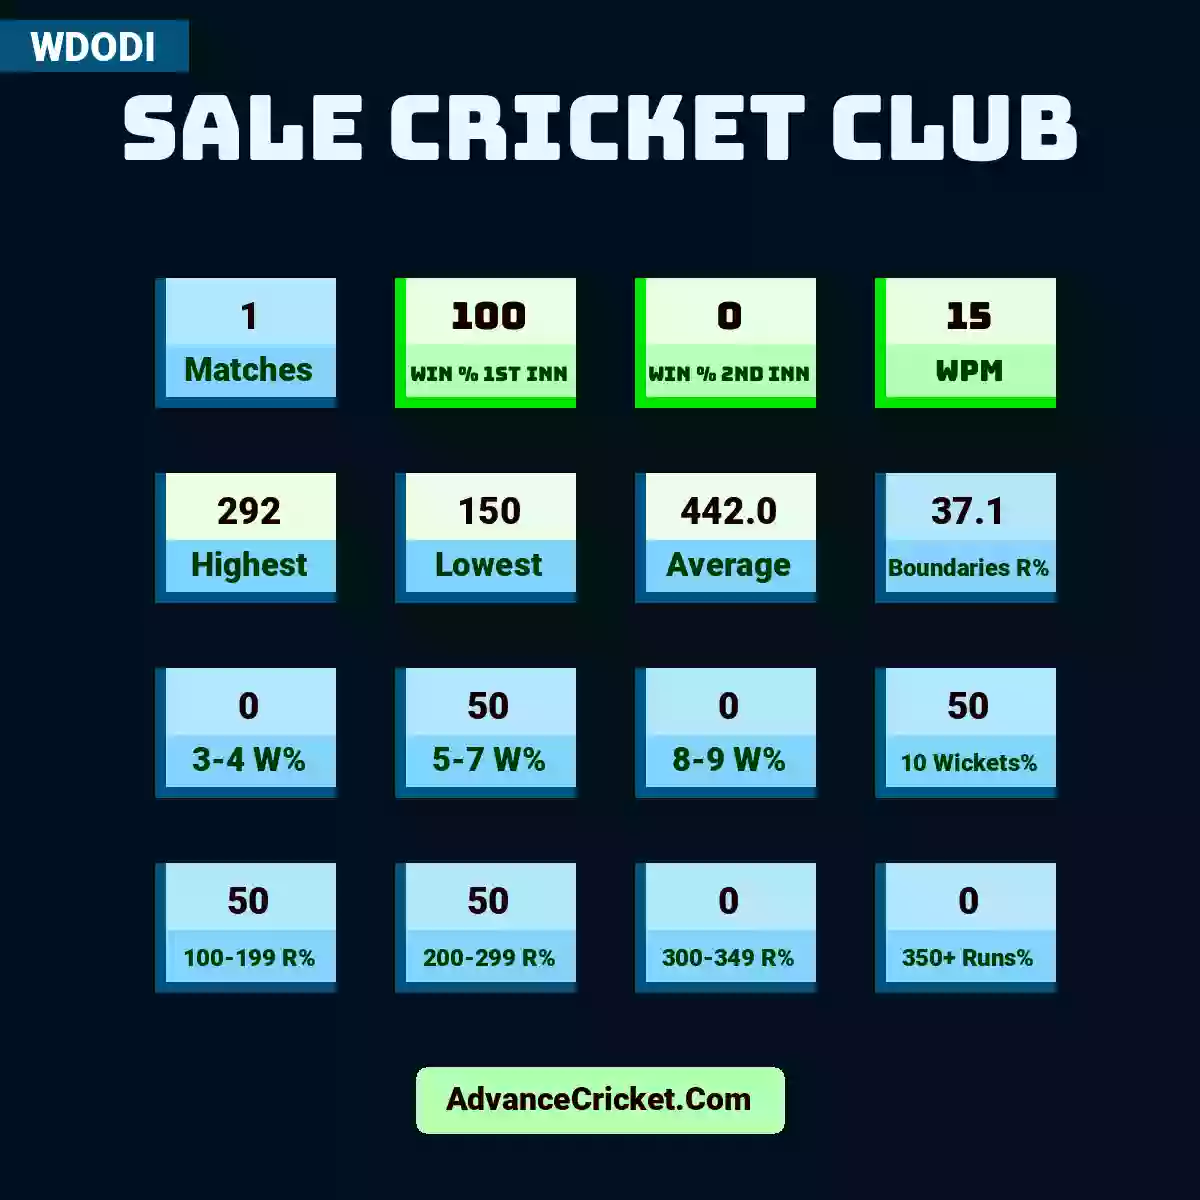 Image showing Sale Cricket Club WDODI with Matches: 1, Win % 1st Inn: 100, Win % 2nd Inn: 0, WPM: 15, Highest: 292, Lowest: 150, Average: 442.0, Boundaries R%: 37.1, 3-4 W%: 0, 5-7 W%: 50, 8-9 W%: 0, 10 Wickets%: 50, 100-199 R%: 50, 200-299 R%: 50, 300-349 R%: 0, 350+ Runs%: 0.